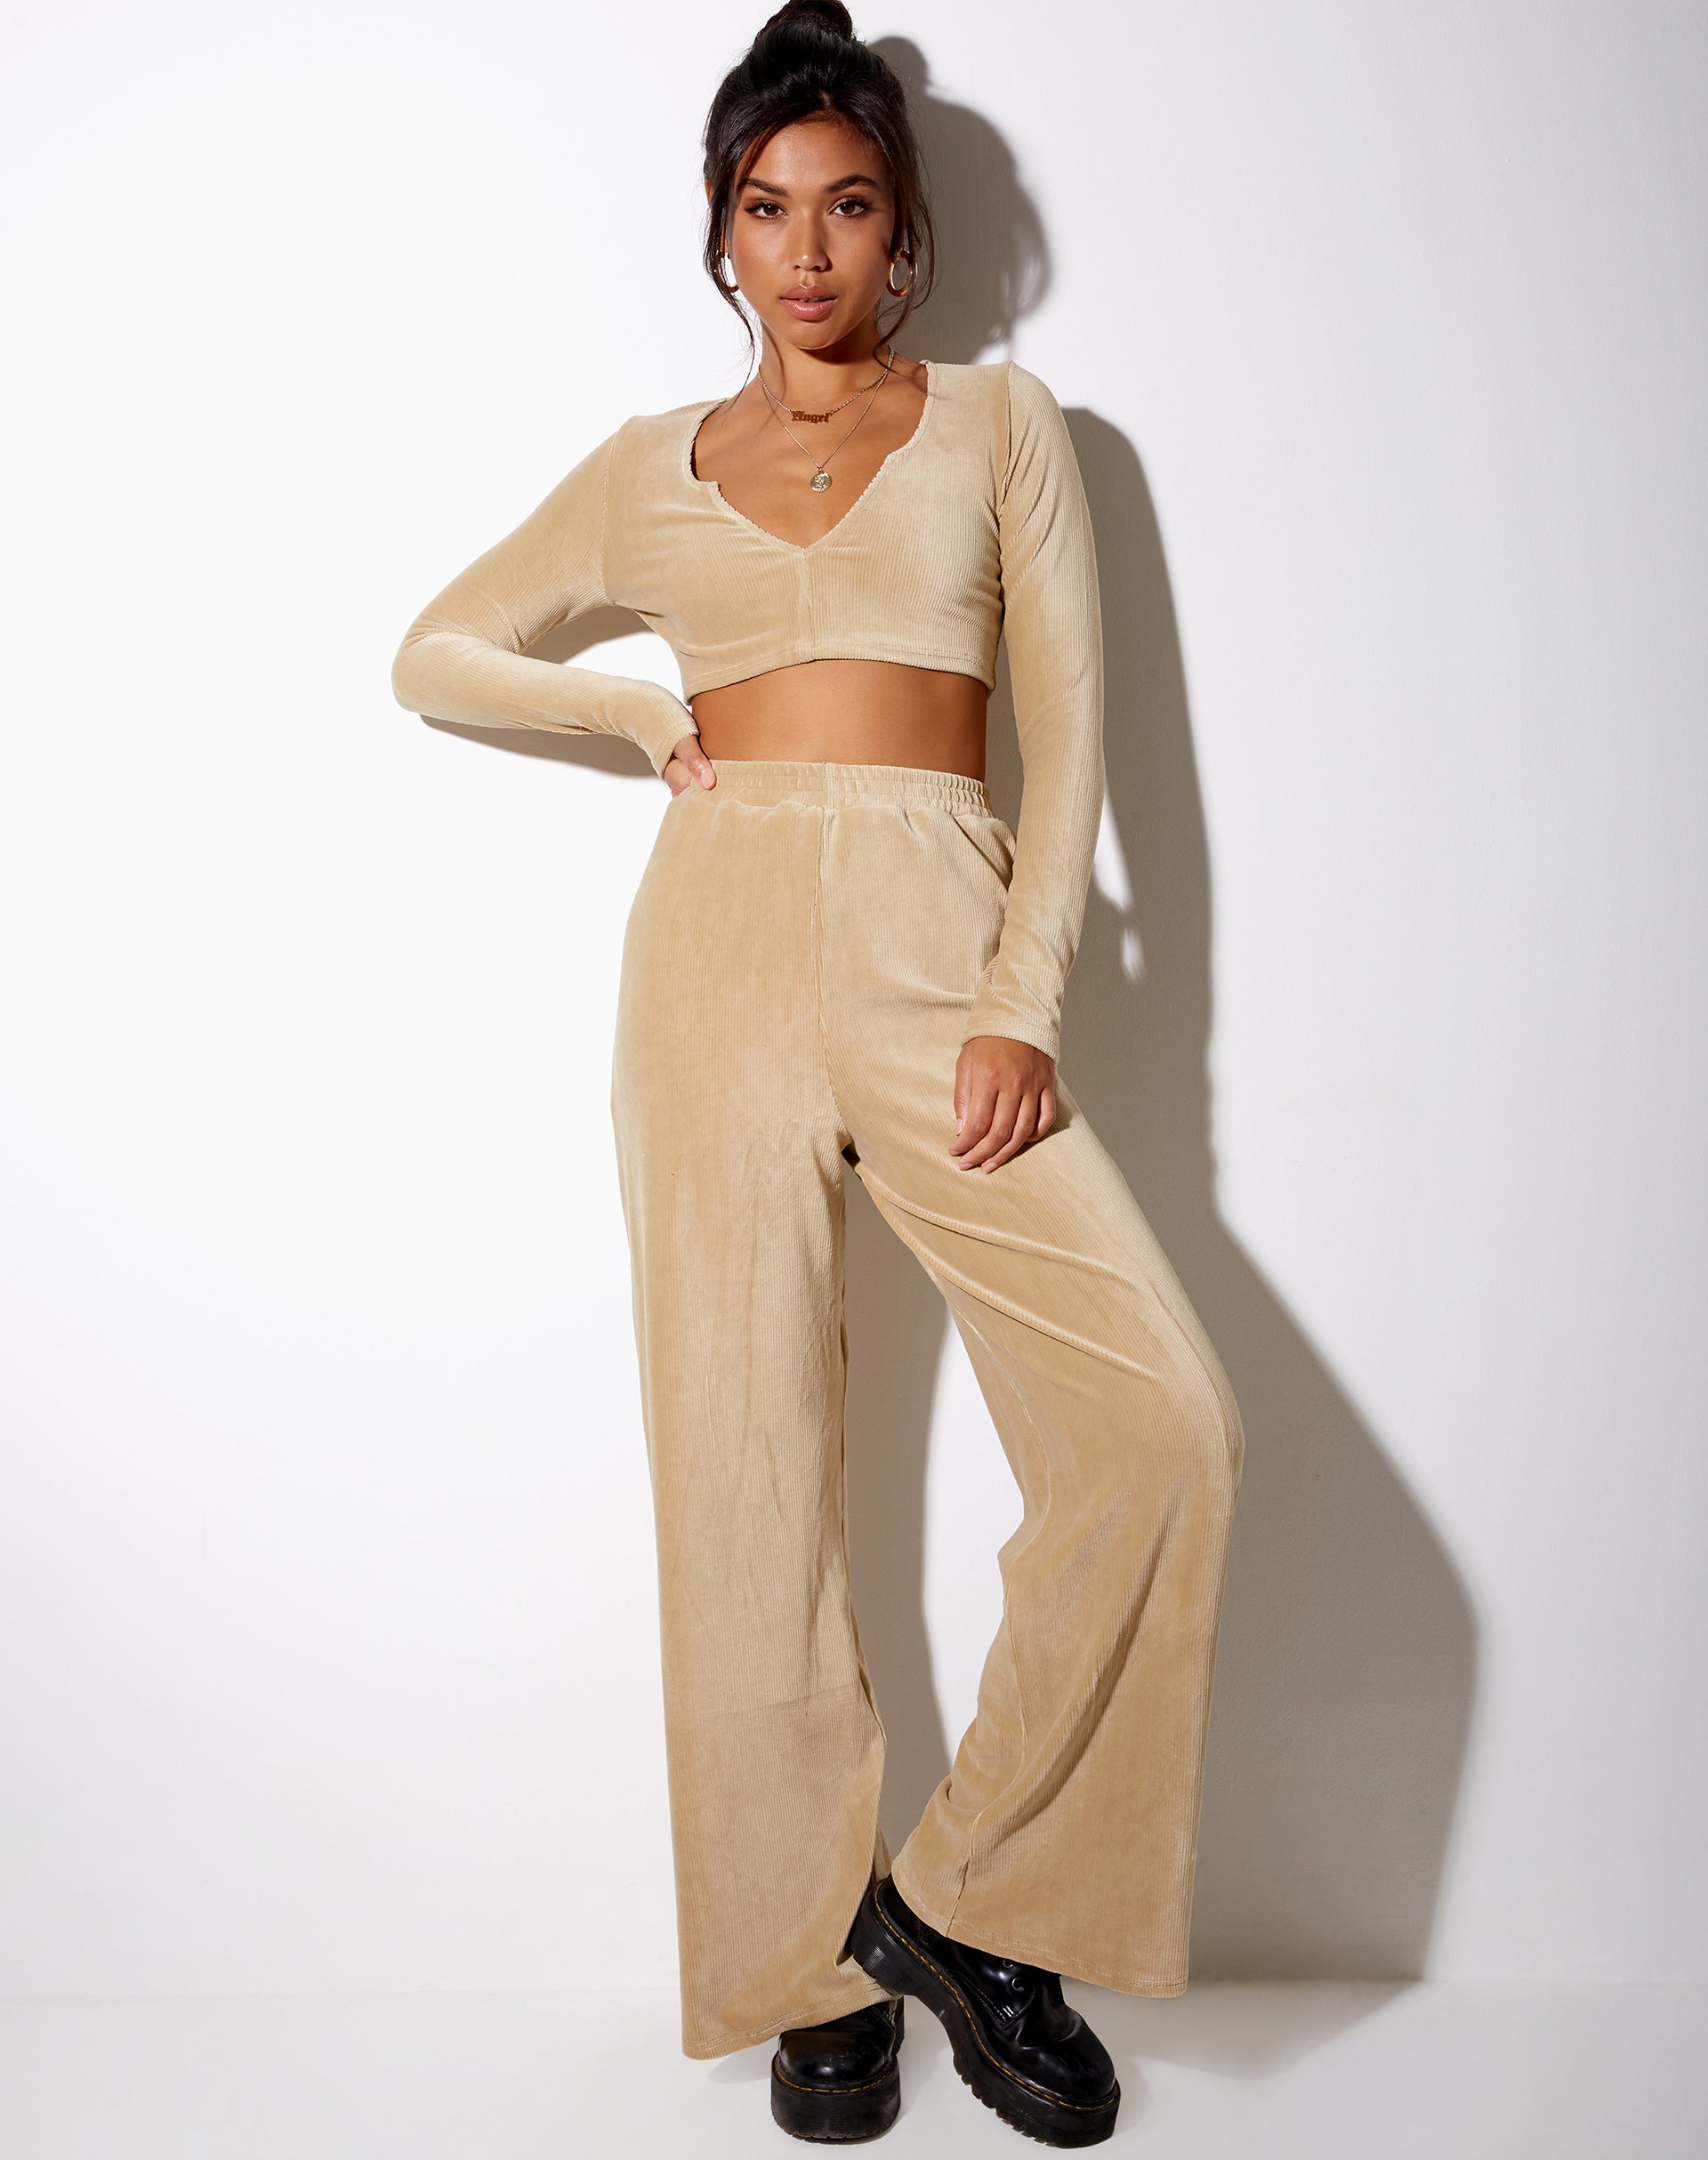 LICHI  Online fashion store  Ribbed velvet flared pants